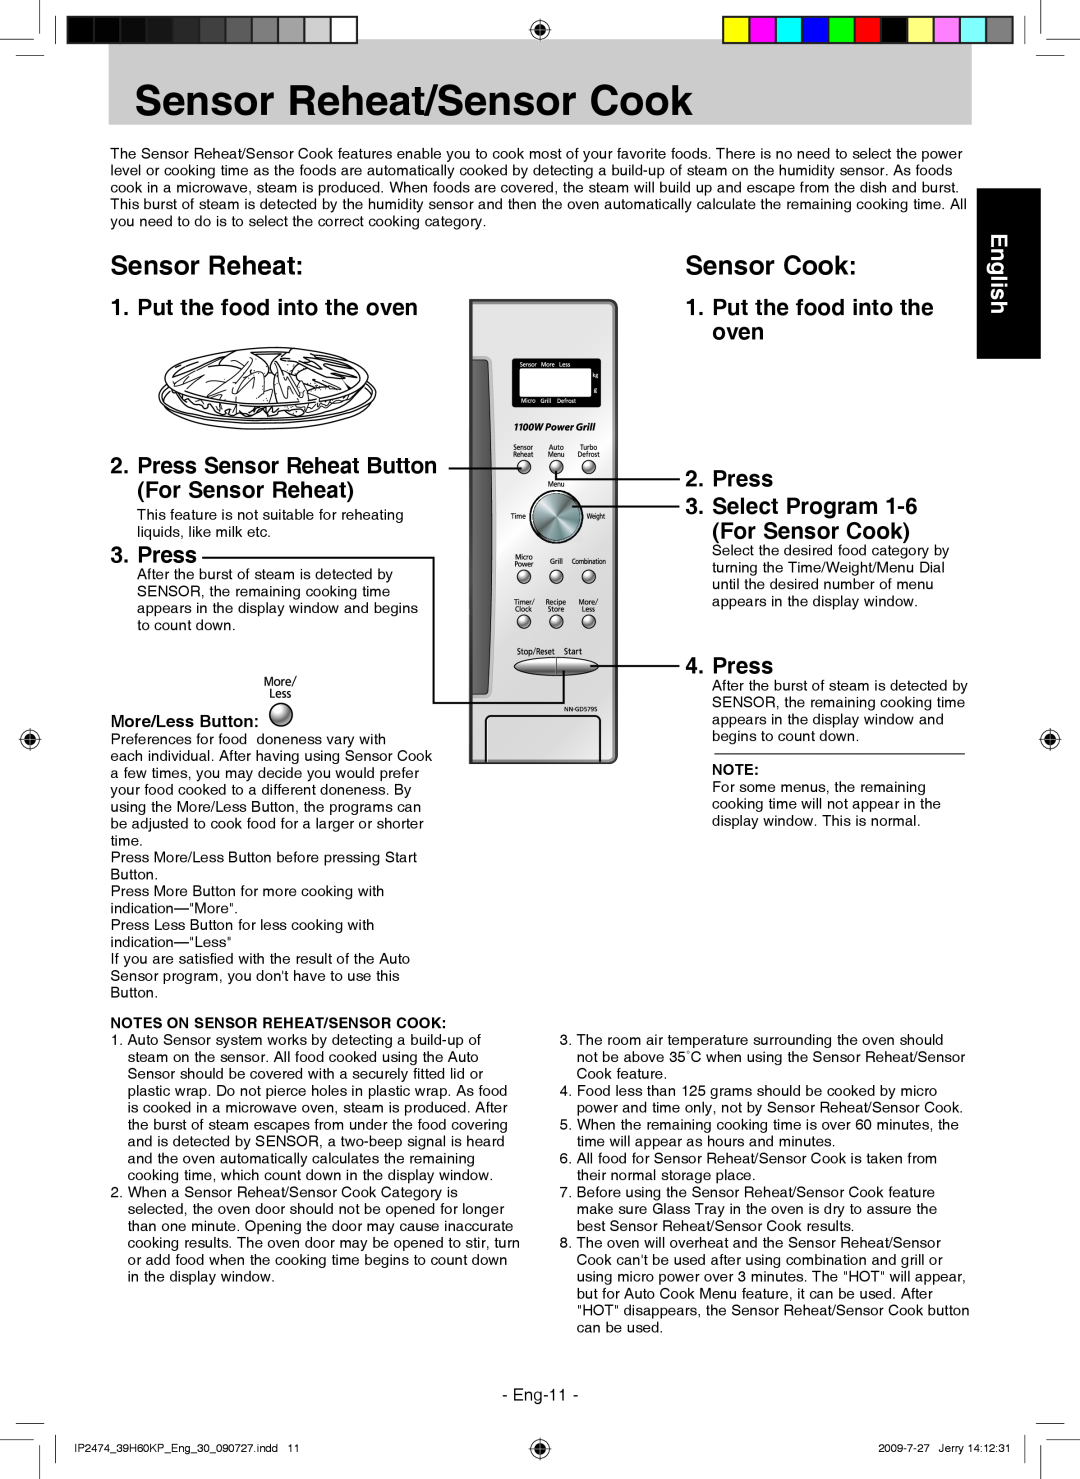 Panasonic NN-GD579S Sensor Reheat/Sensor Cook, Put the food into the oven 2. Press Sensor Reheat Button, For Sensor Reheat 